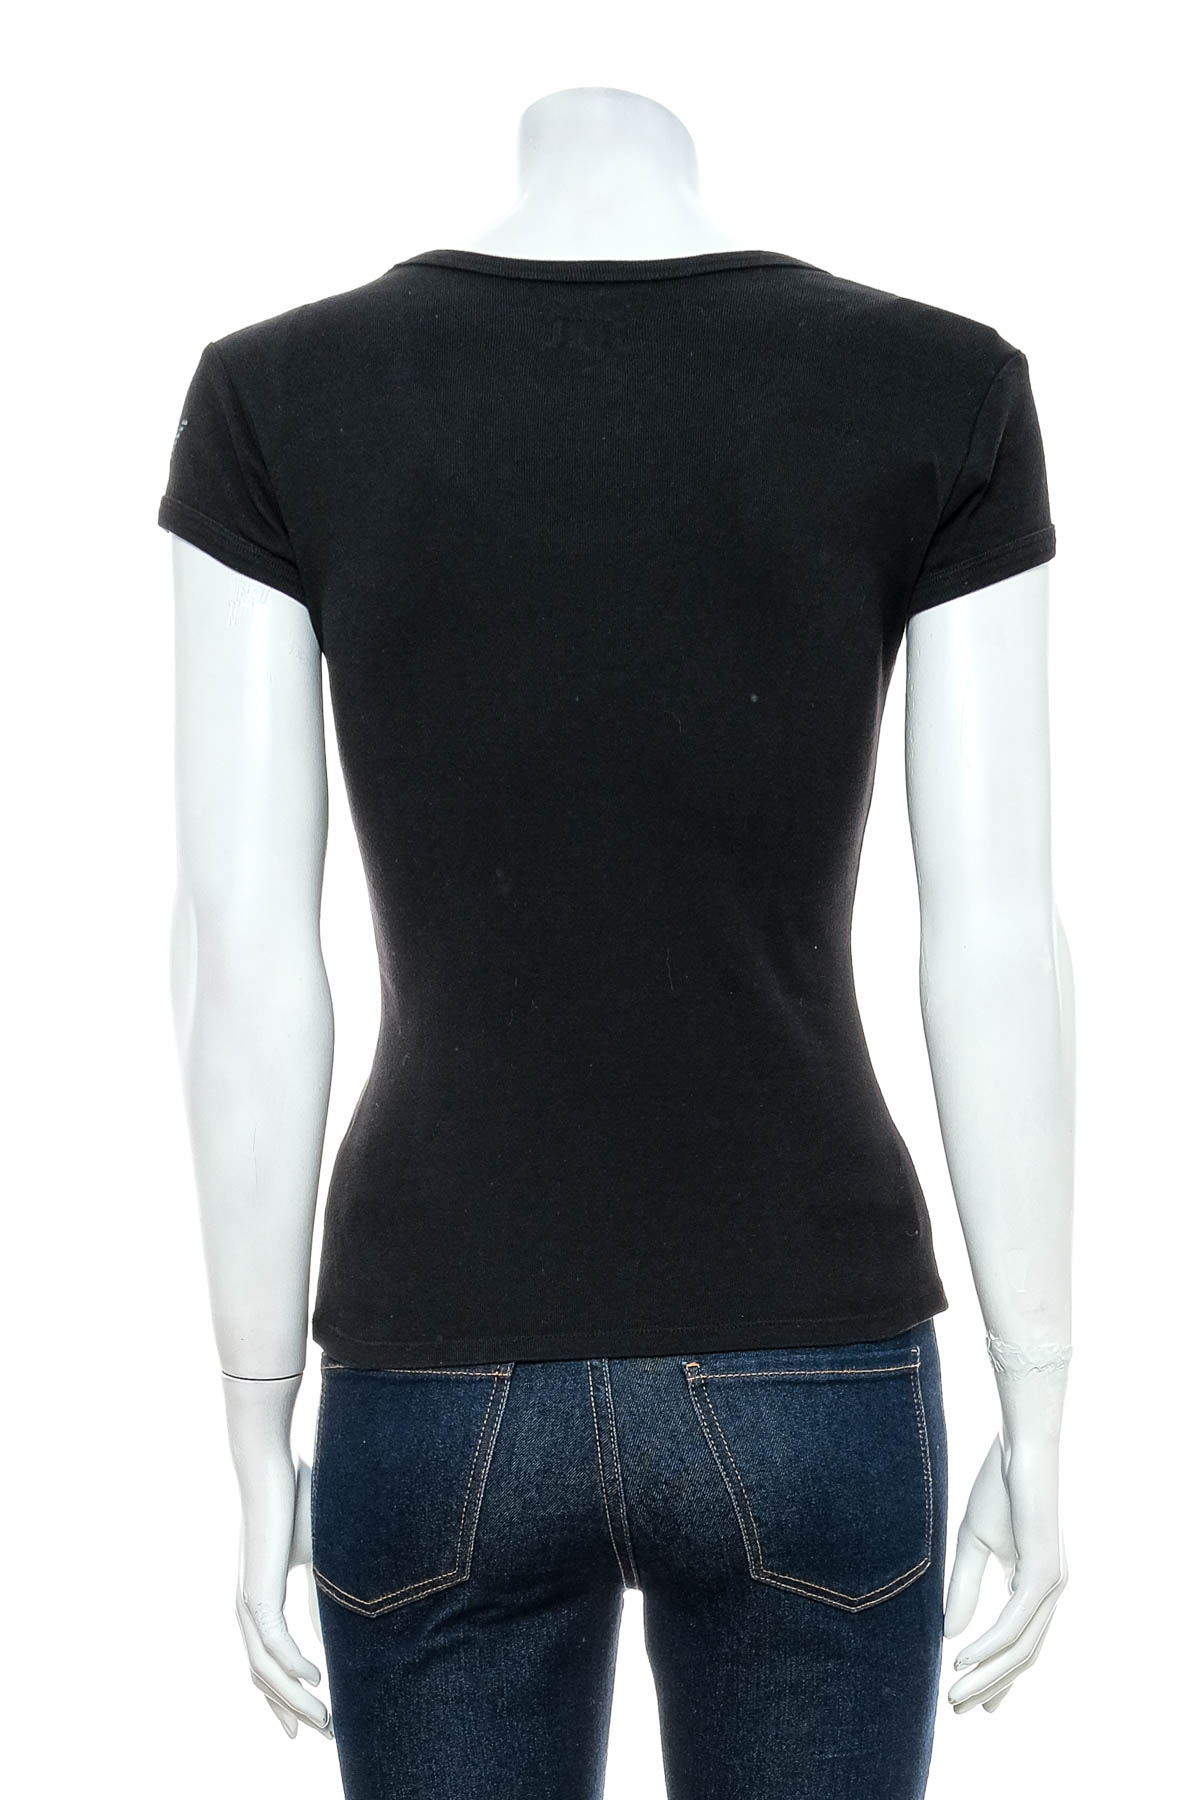 Women's t-shirt - Armani Jeans - 1